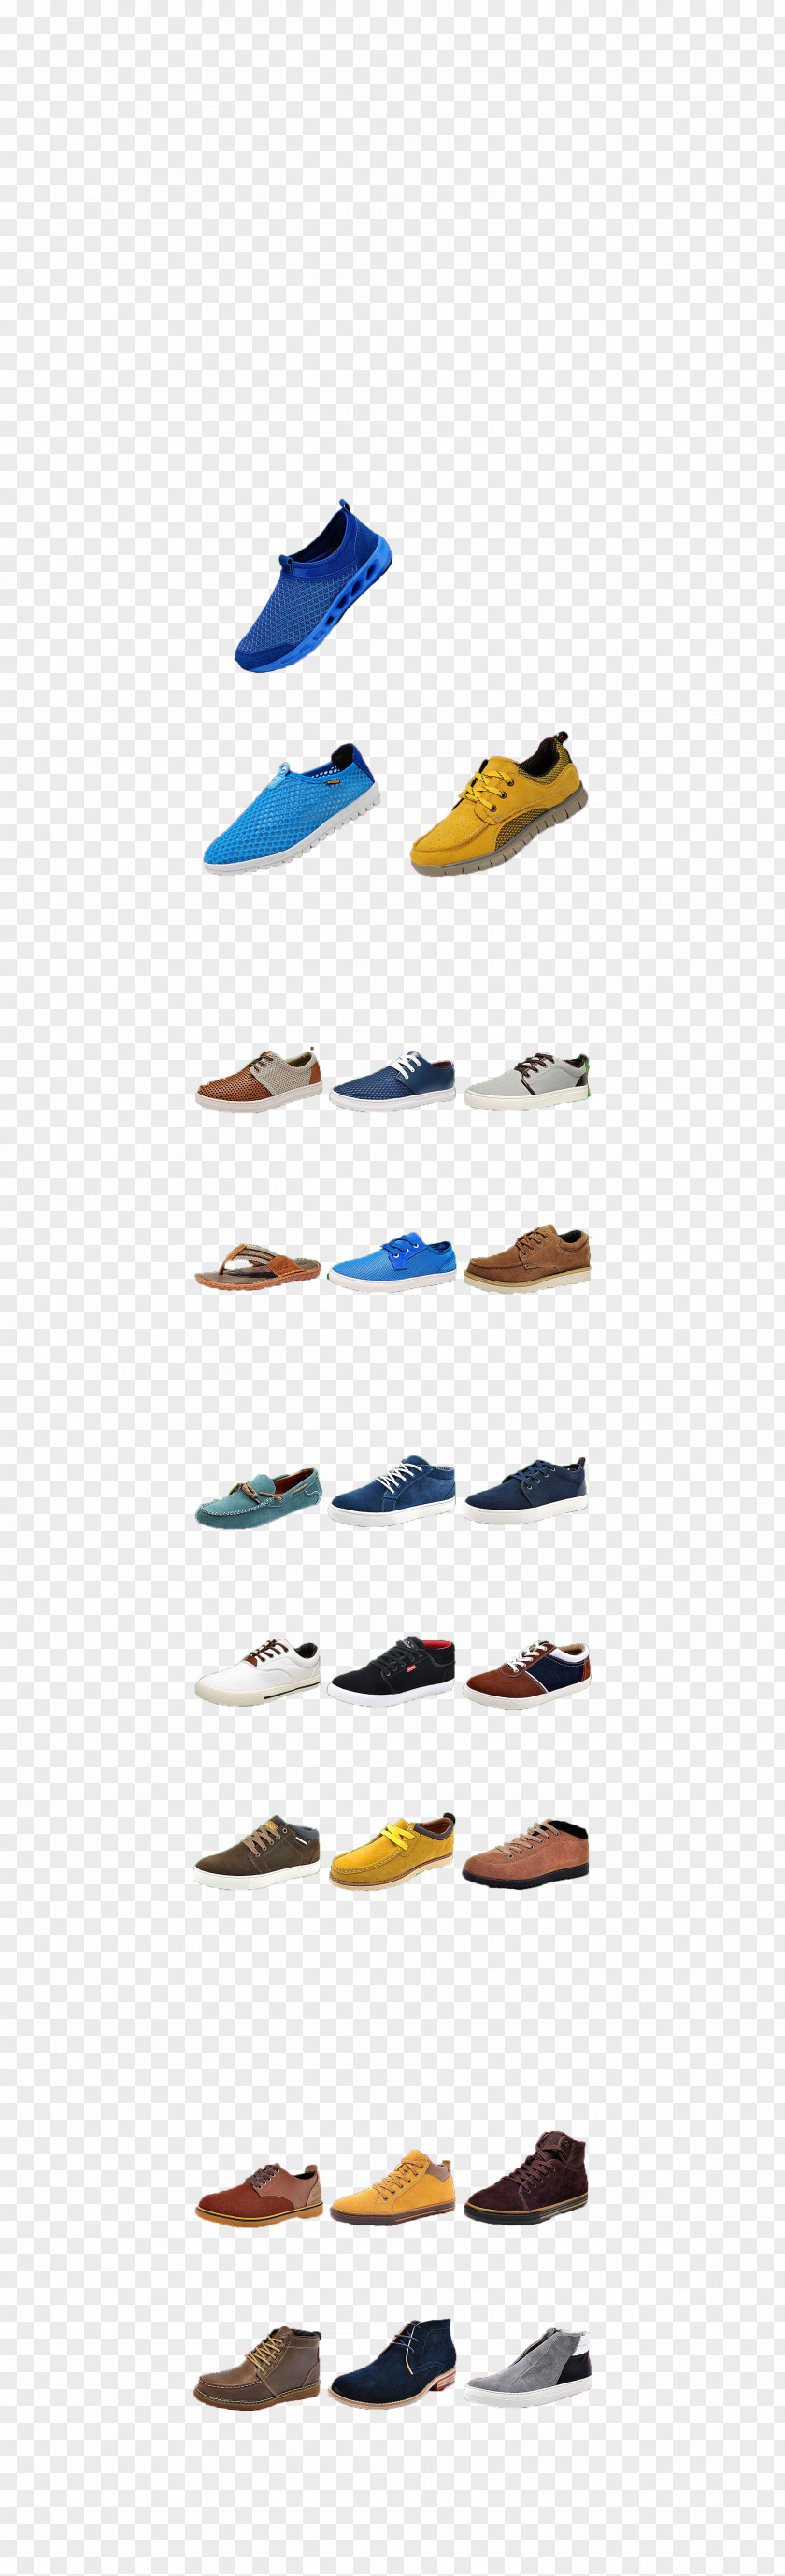 Sports Shoes Sneakers Shoe Footwear PNG